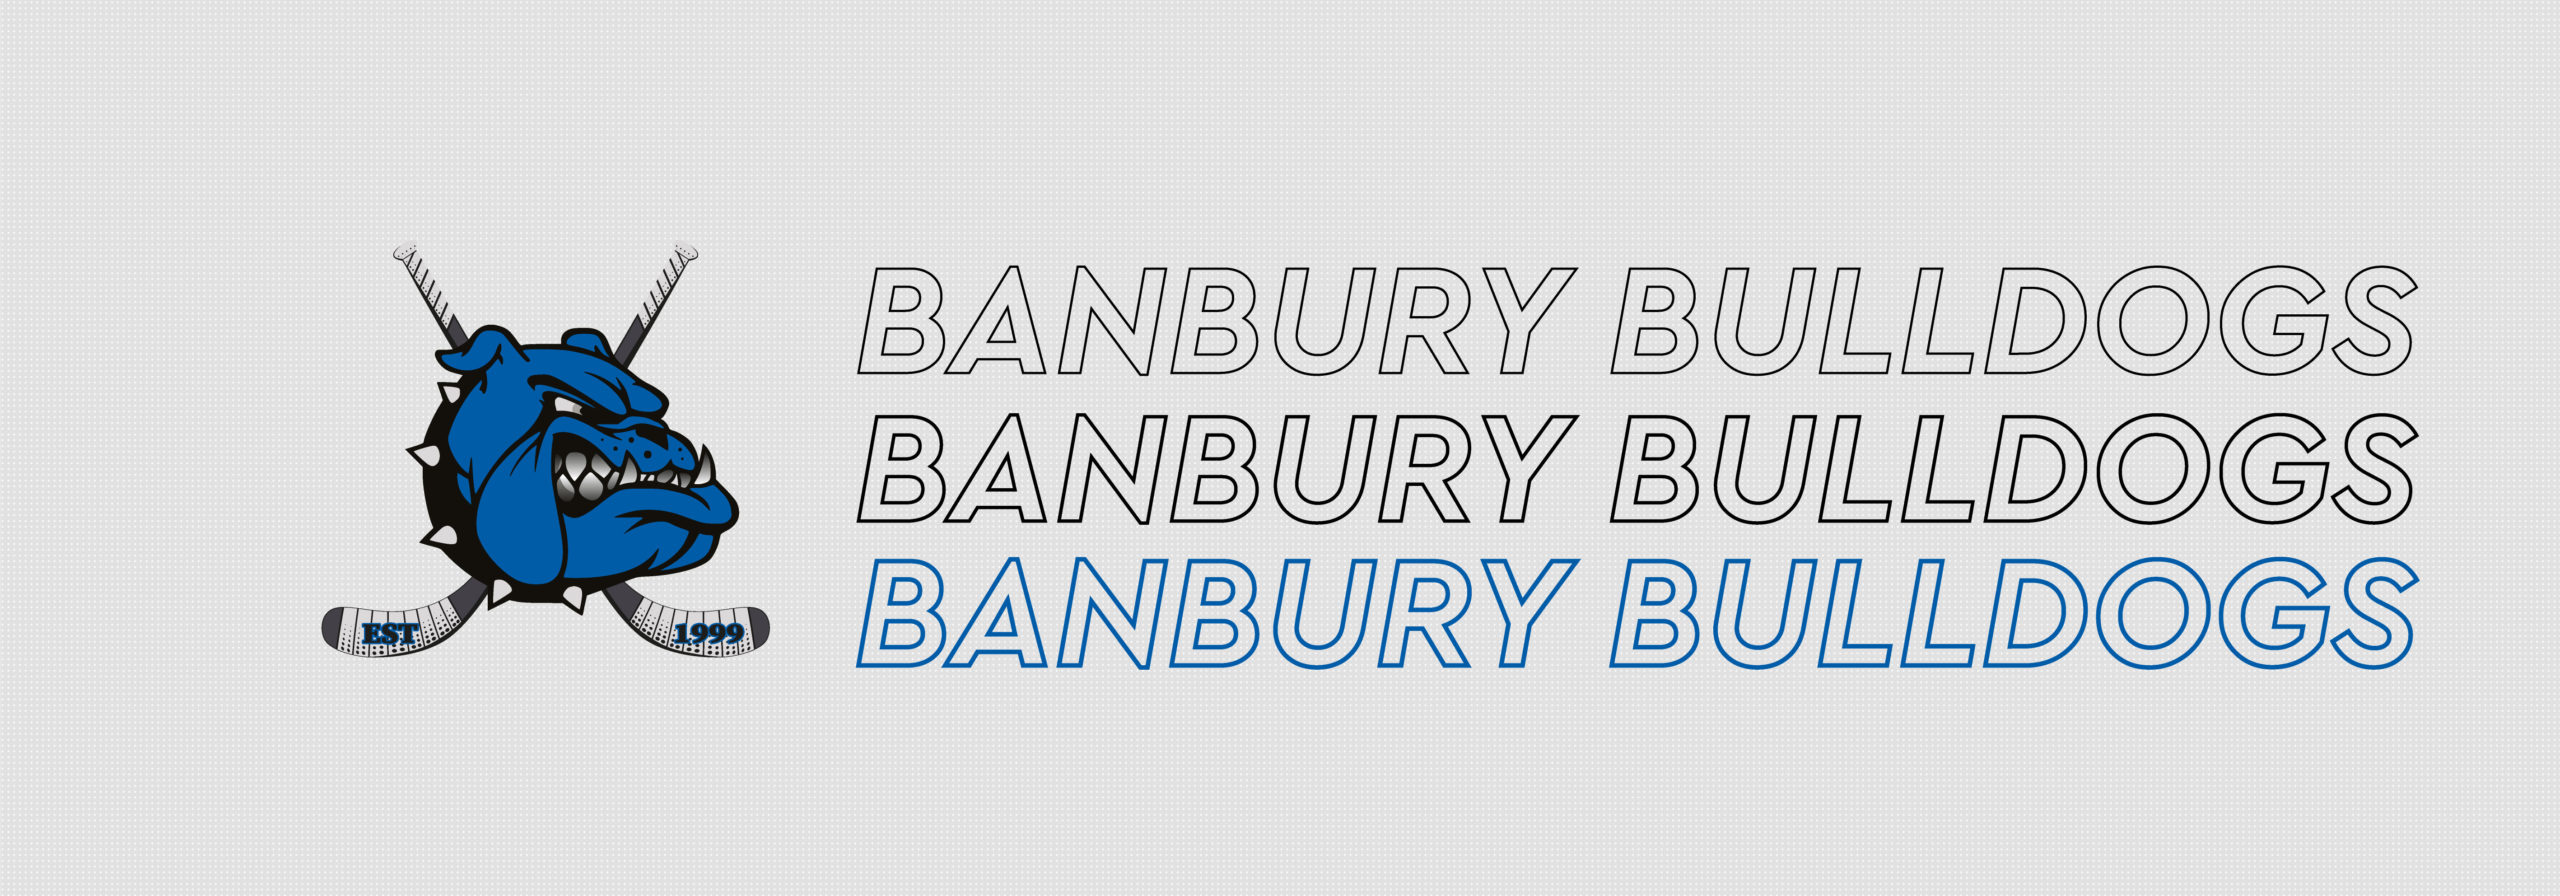 Banbury Bulldogs Technical T-Shirt